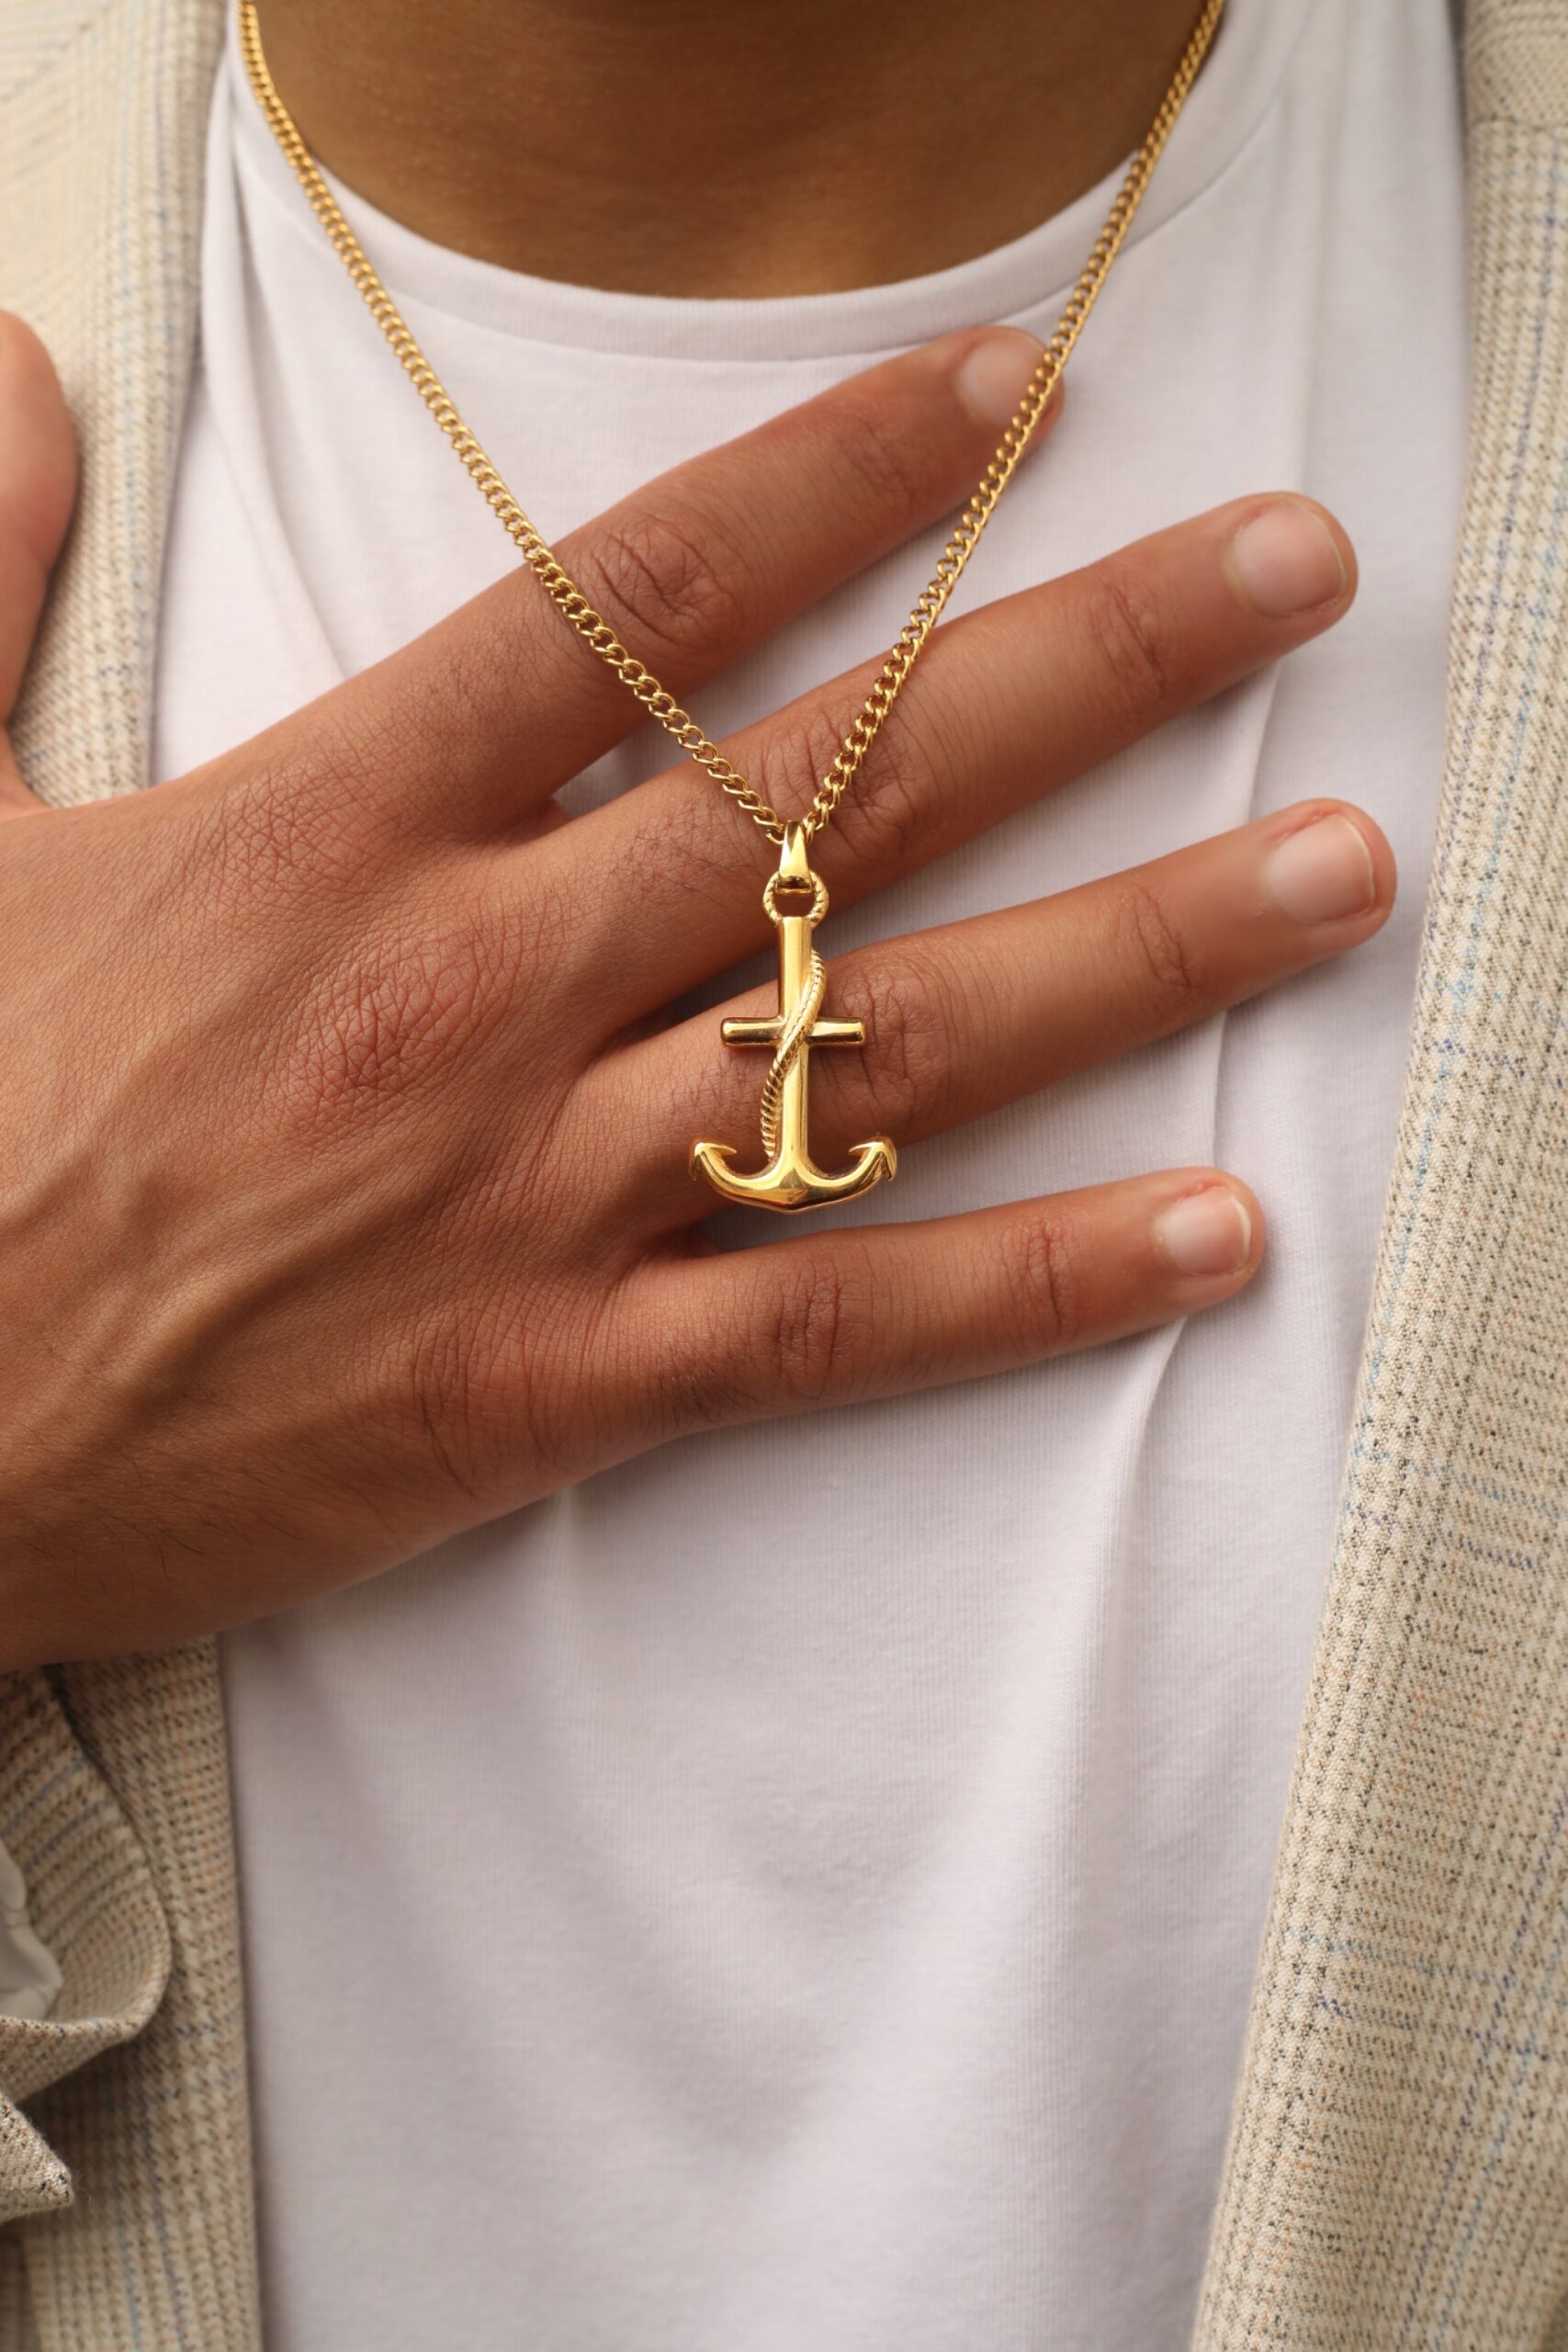 Gold Anchor Designer Chain Pendant For Men Boys - Fashion Frill